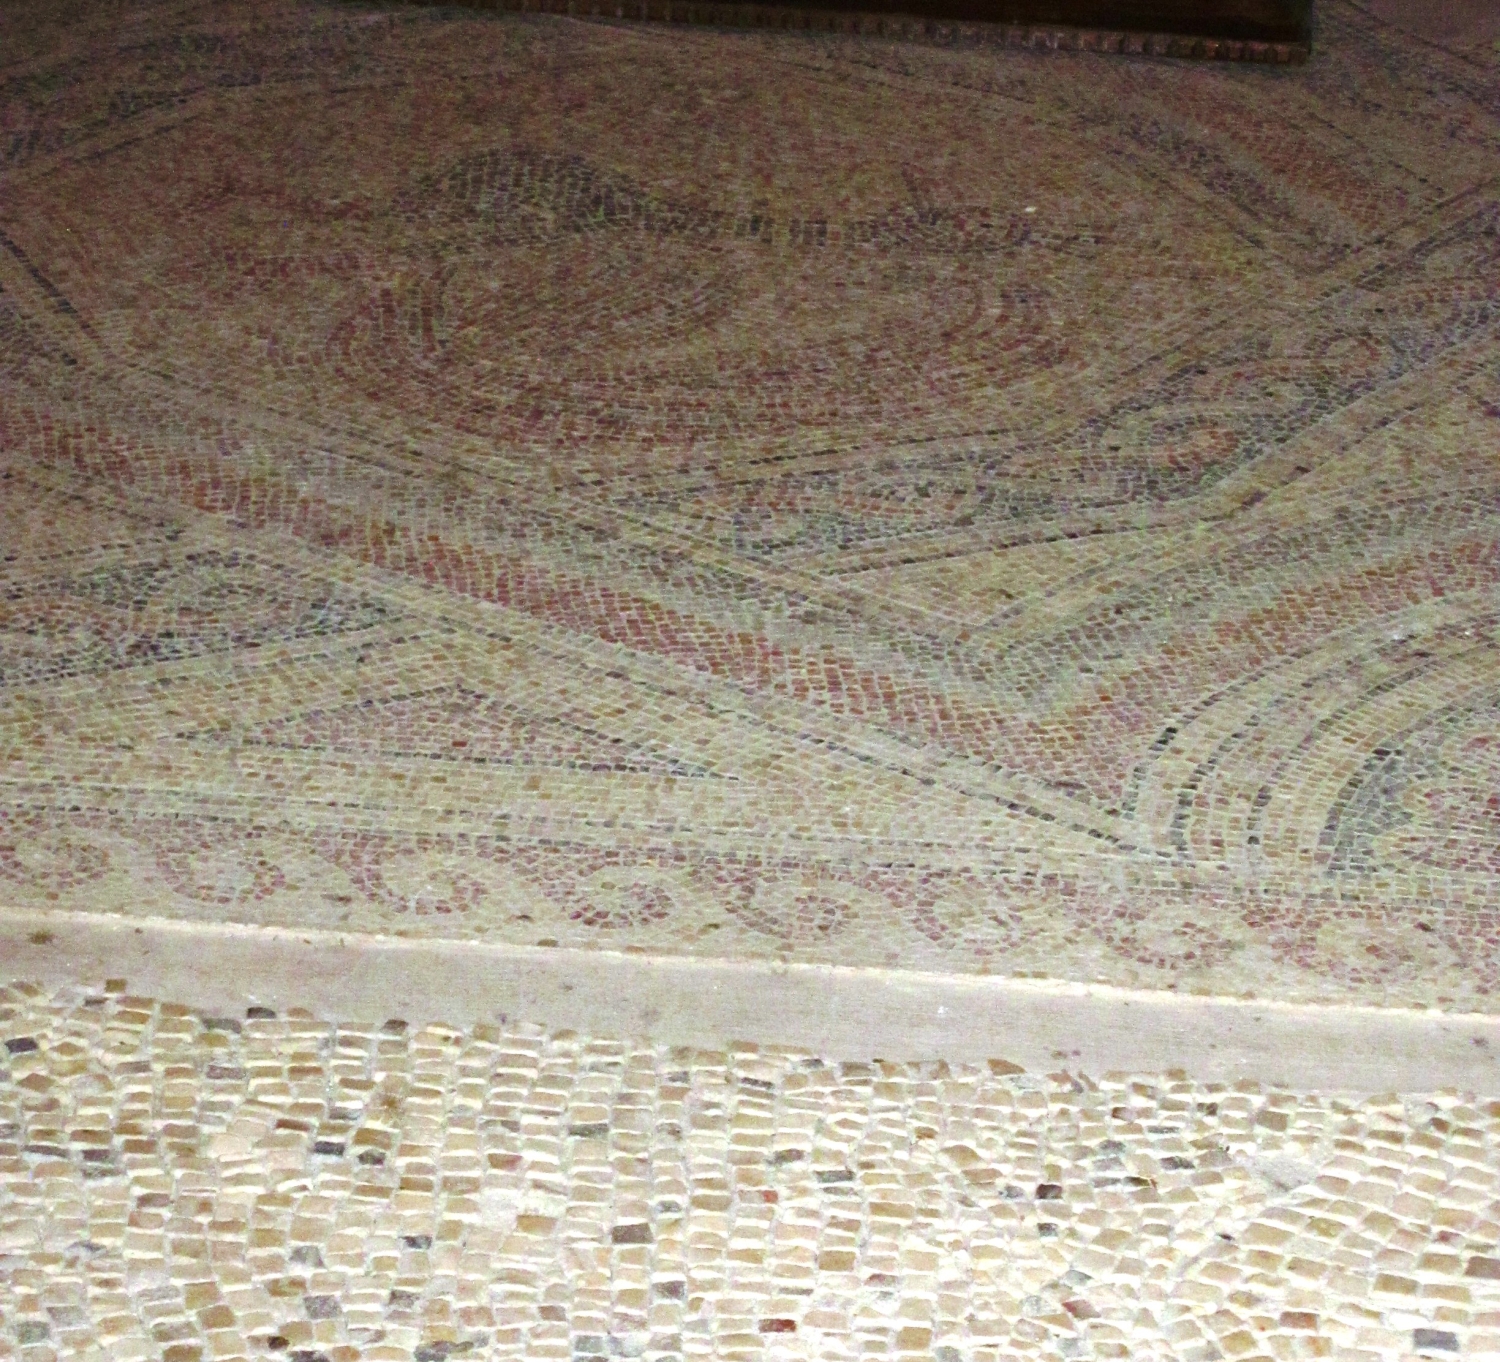 Interior, detail of mosaic floor